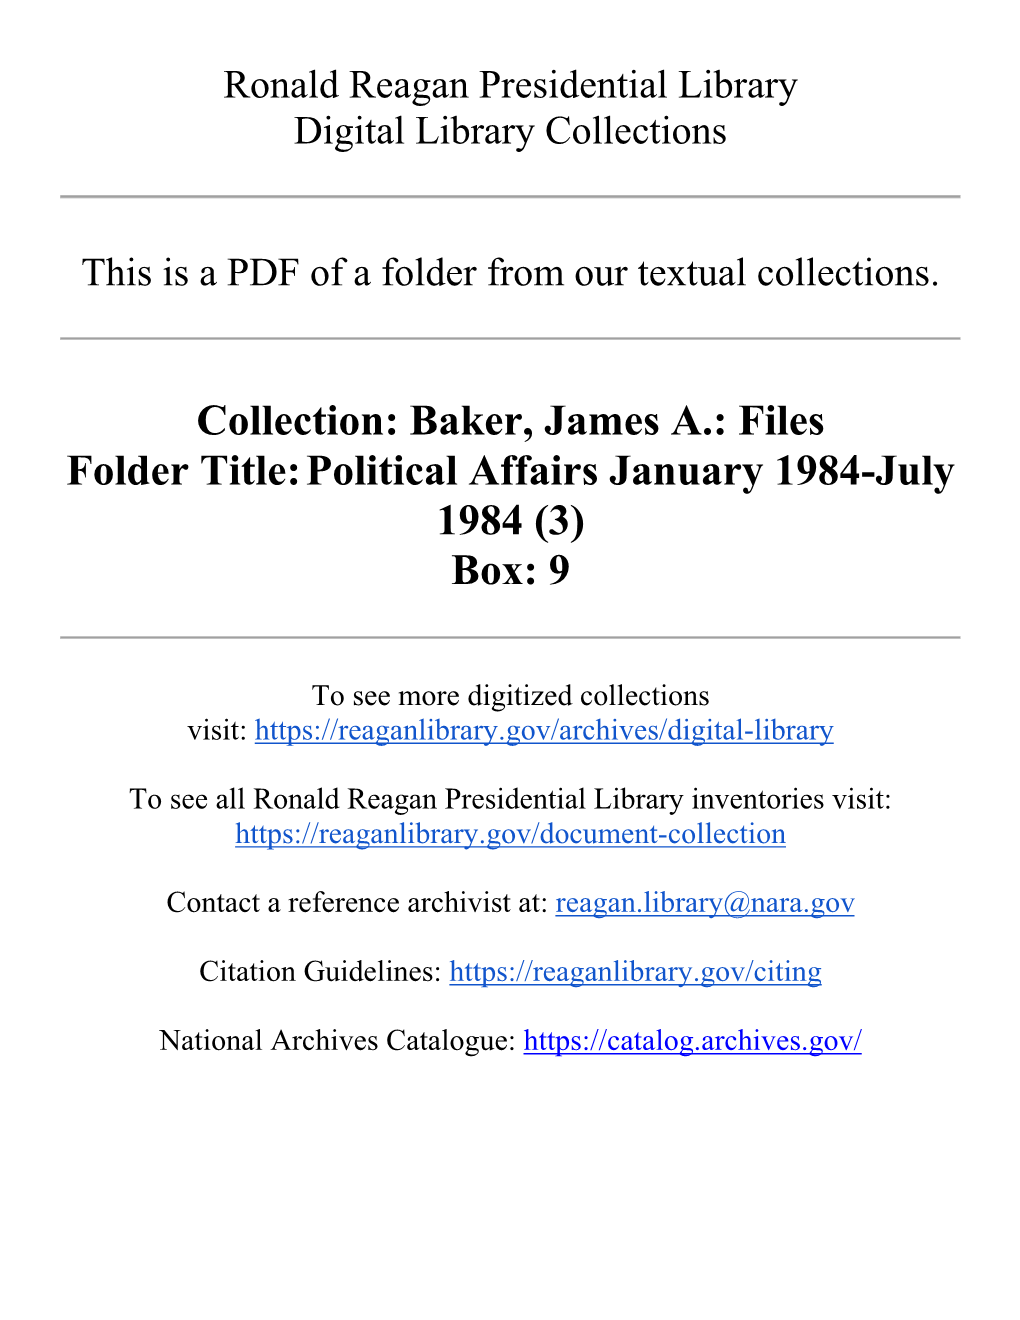 Baker, James A.: Files Folder Title: Political Affairs January 1984-July 1984 (3) Box: 9